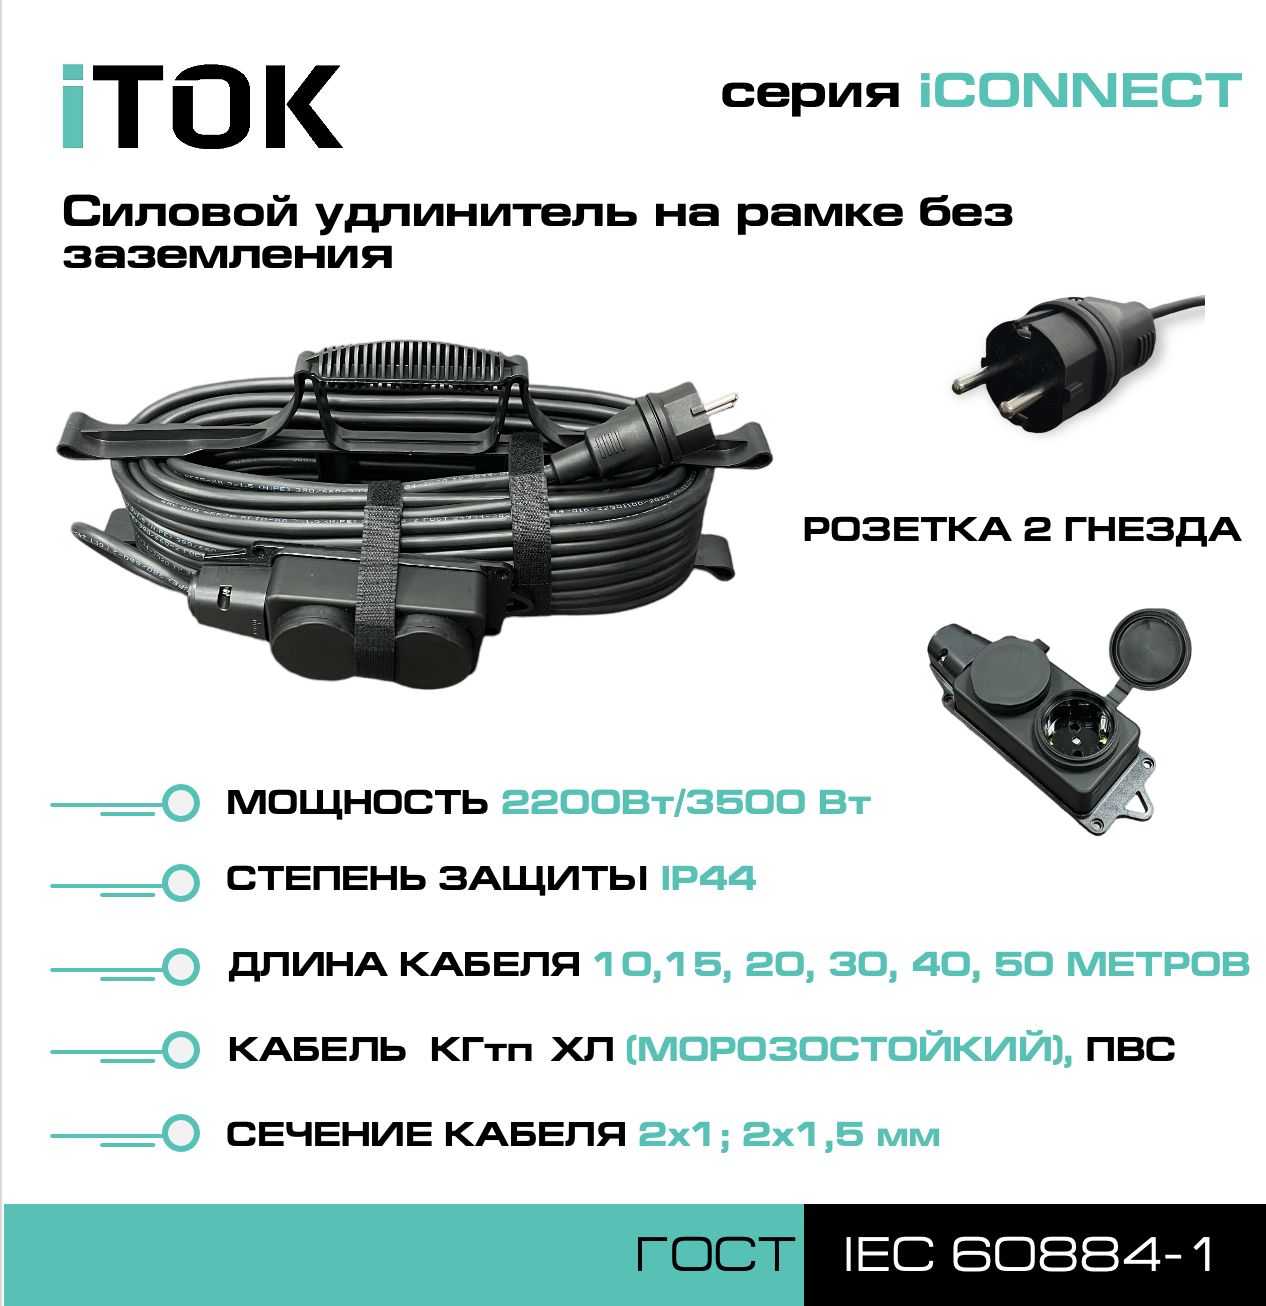 Удлинитель на рамке без земли серии iTOK iCONNECT КГтп-ХЛ 2х1,5 мм 2 гнезда IP44 10 м